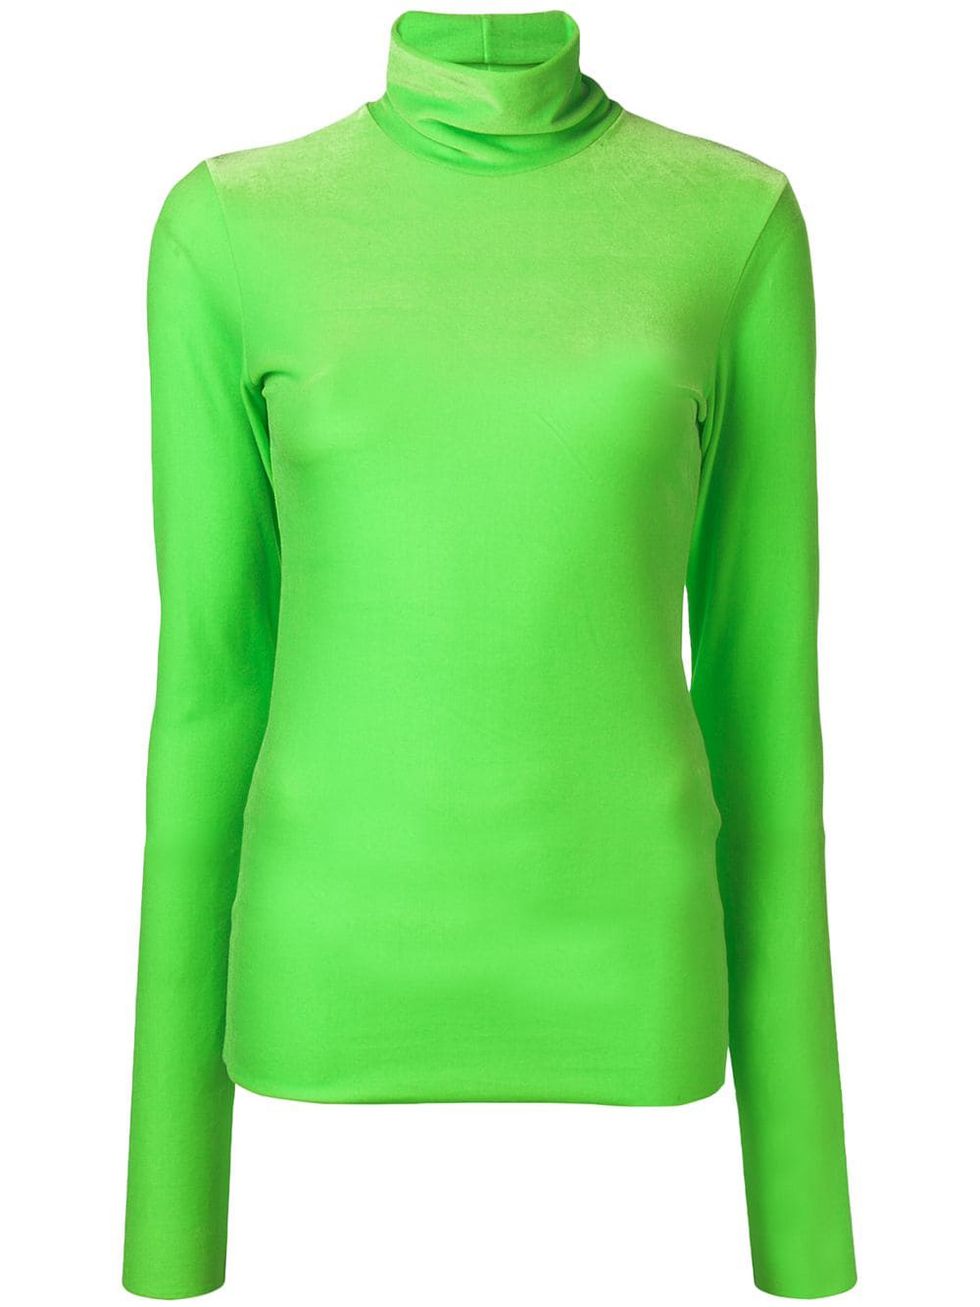 Green, Clothing, Sleeve, Long-sleeved t-shirt, Neck, Shoulder, Sweater, T-shirt, Outerwear, Active shirt, 